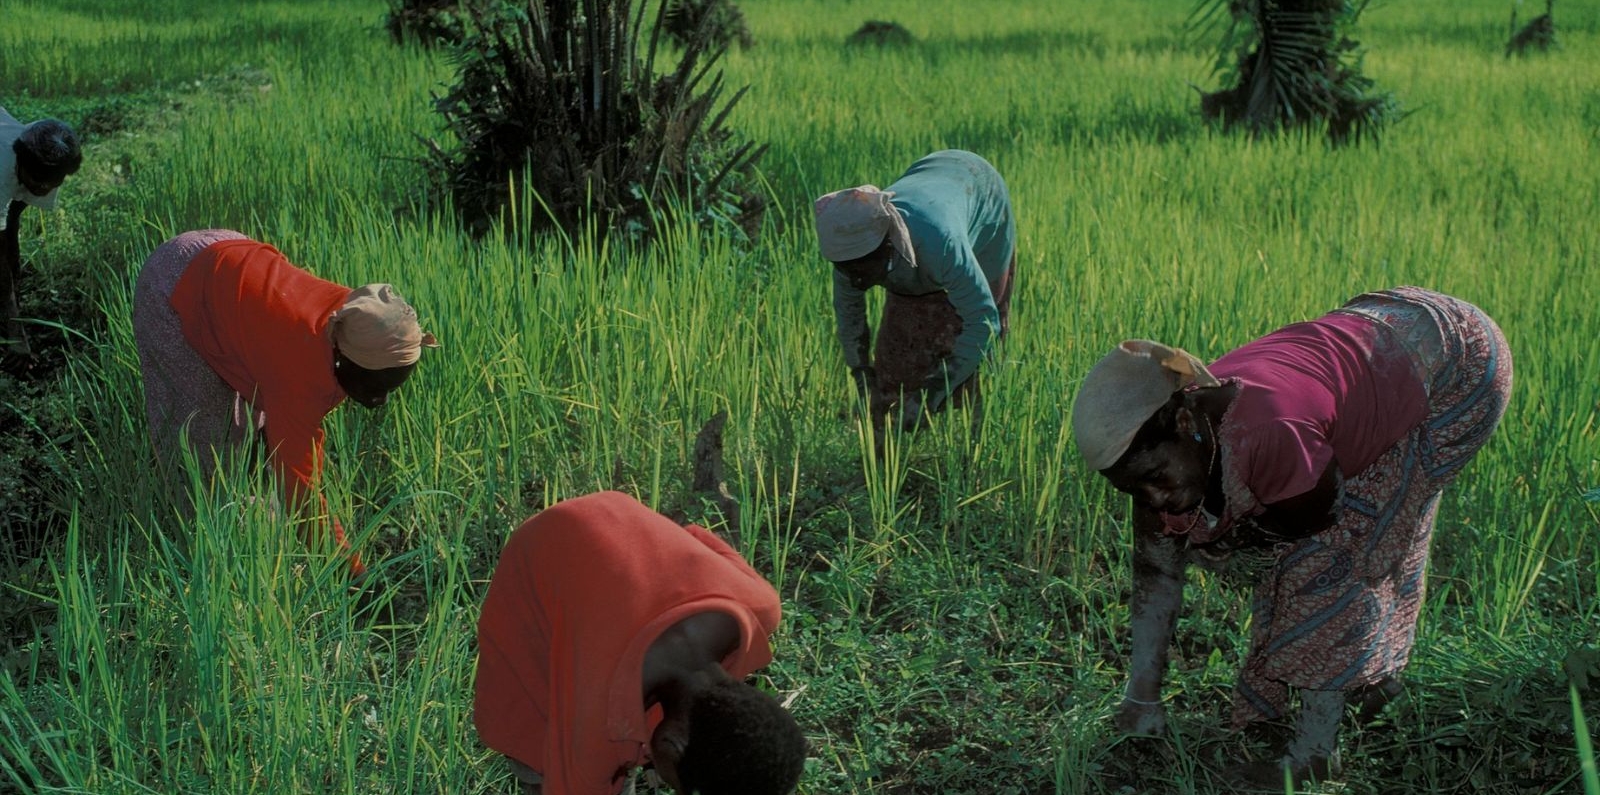 women working on crops